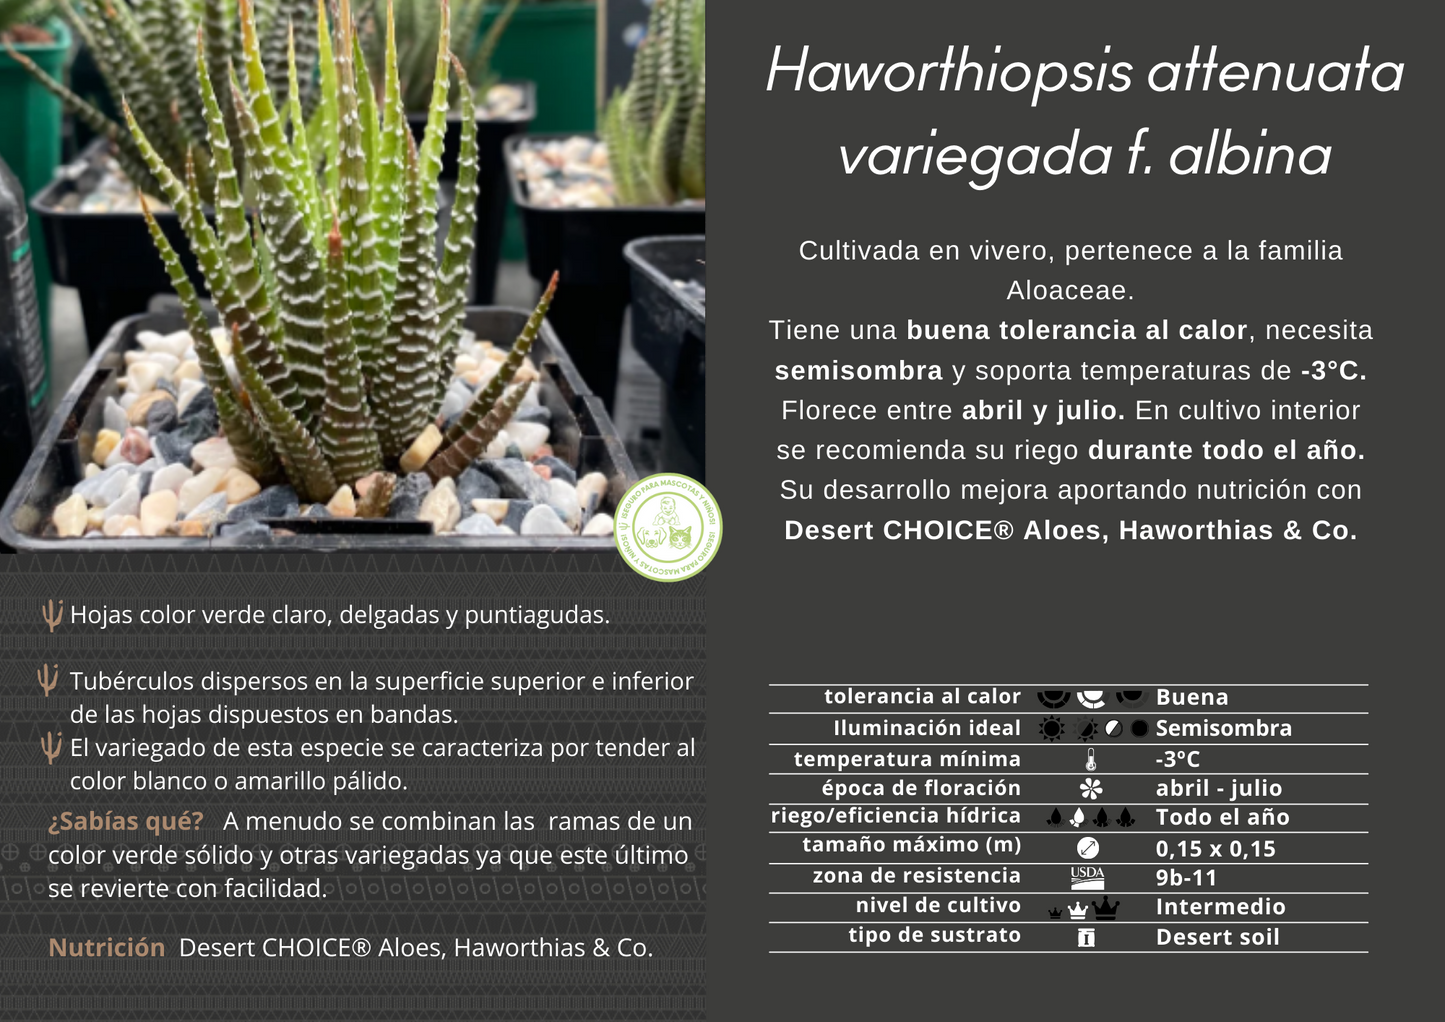 Haworthiopsis attenuata variegada f. albina